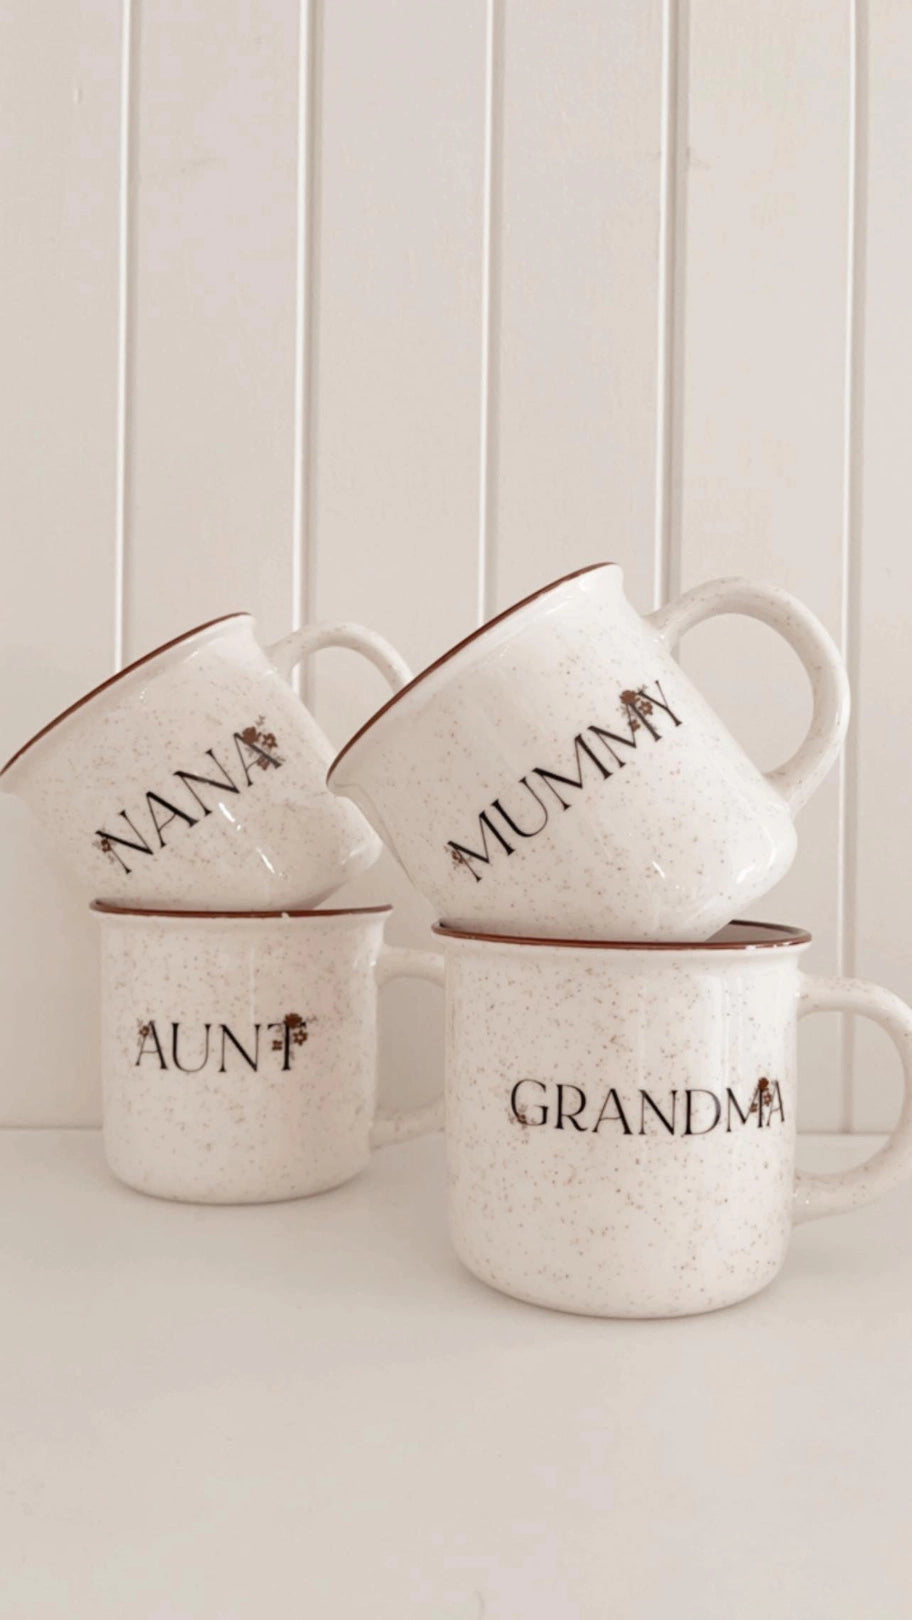 Mug - Secret Garden - Aunt